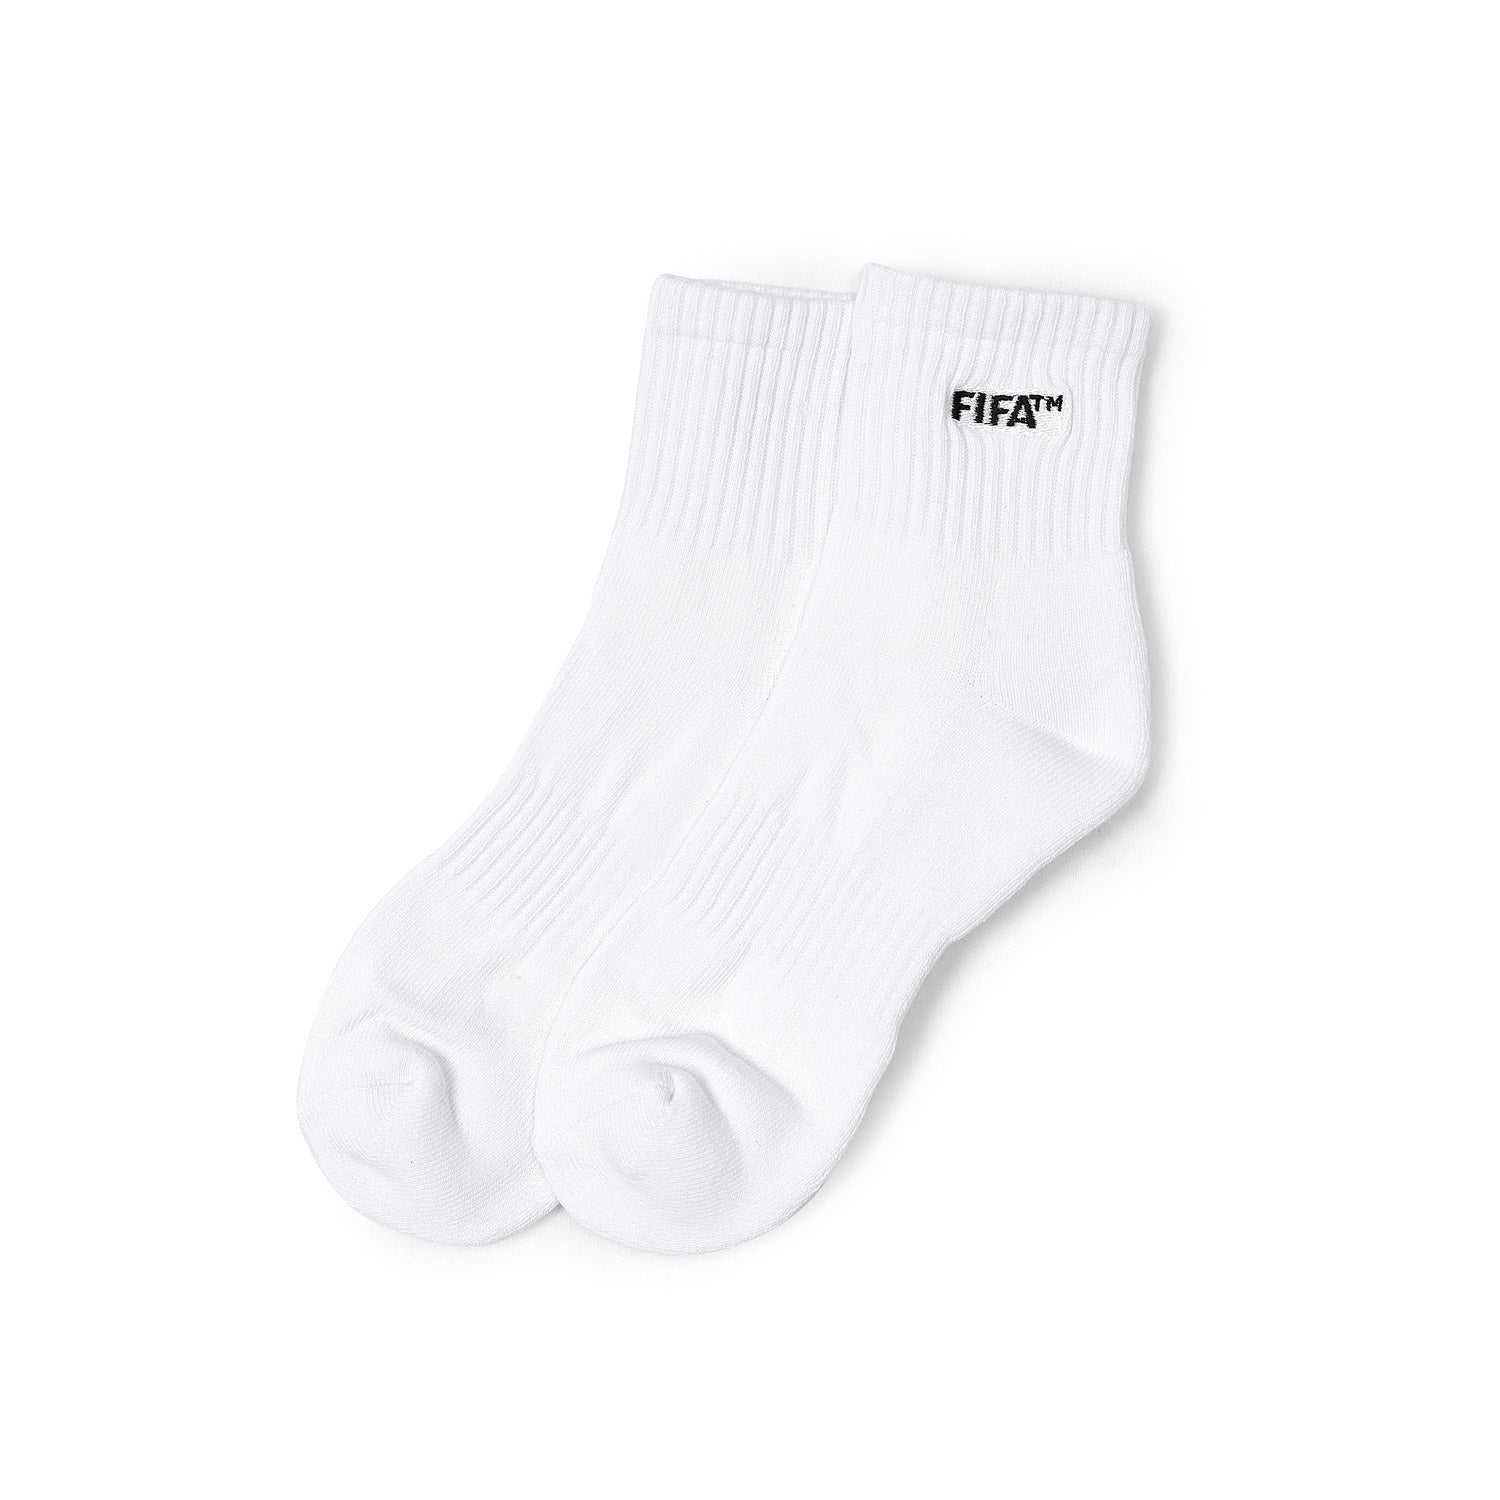 FIFA Essentials White Ankle Socks - Men's